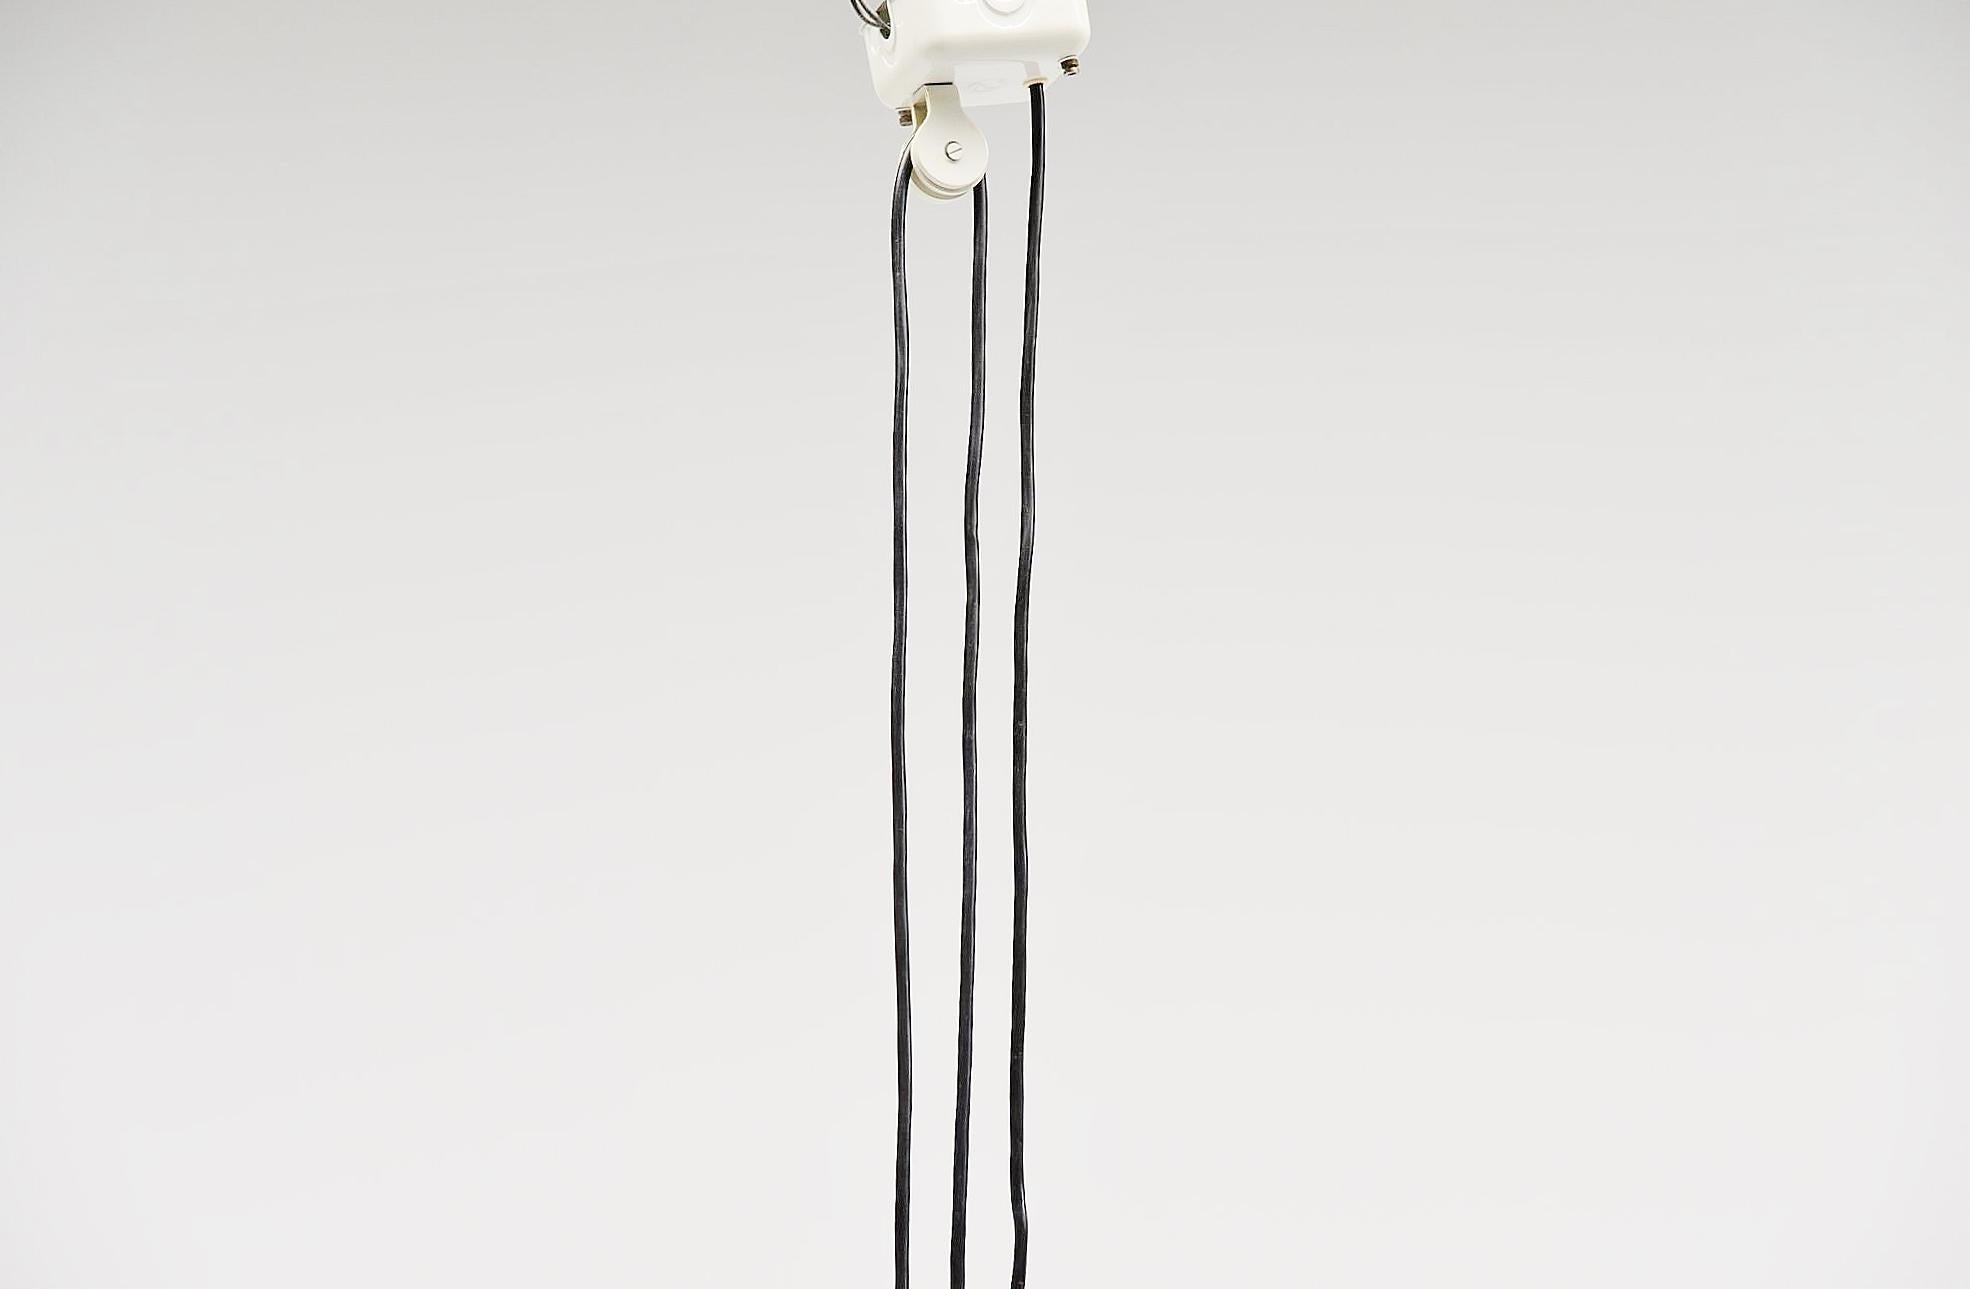 Lacquered Achille Castiglioni Relemme Balance Lamp Flos, Italy, 1962